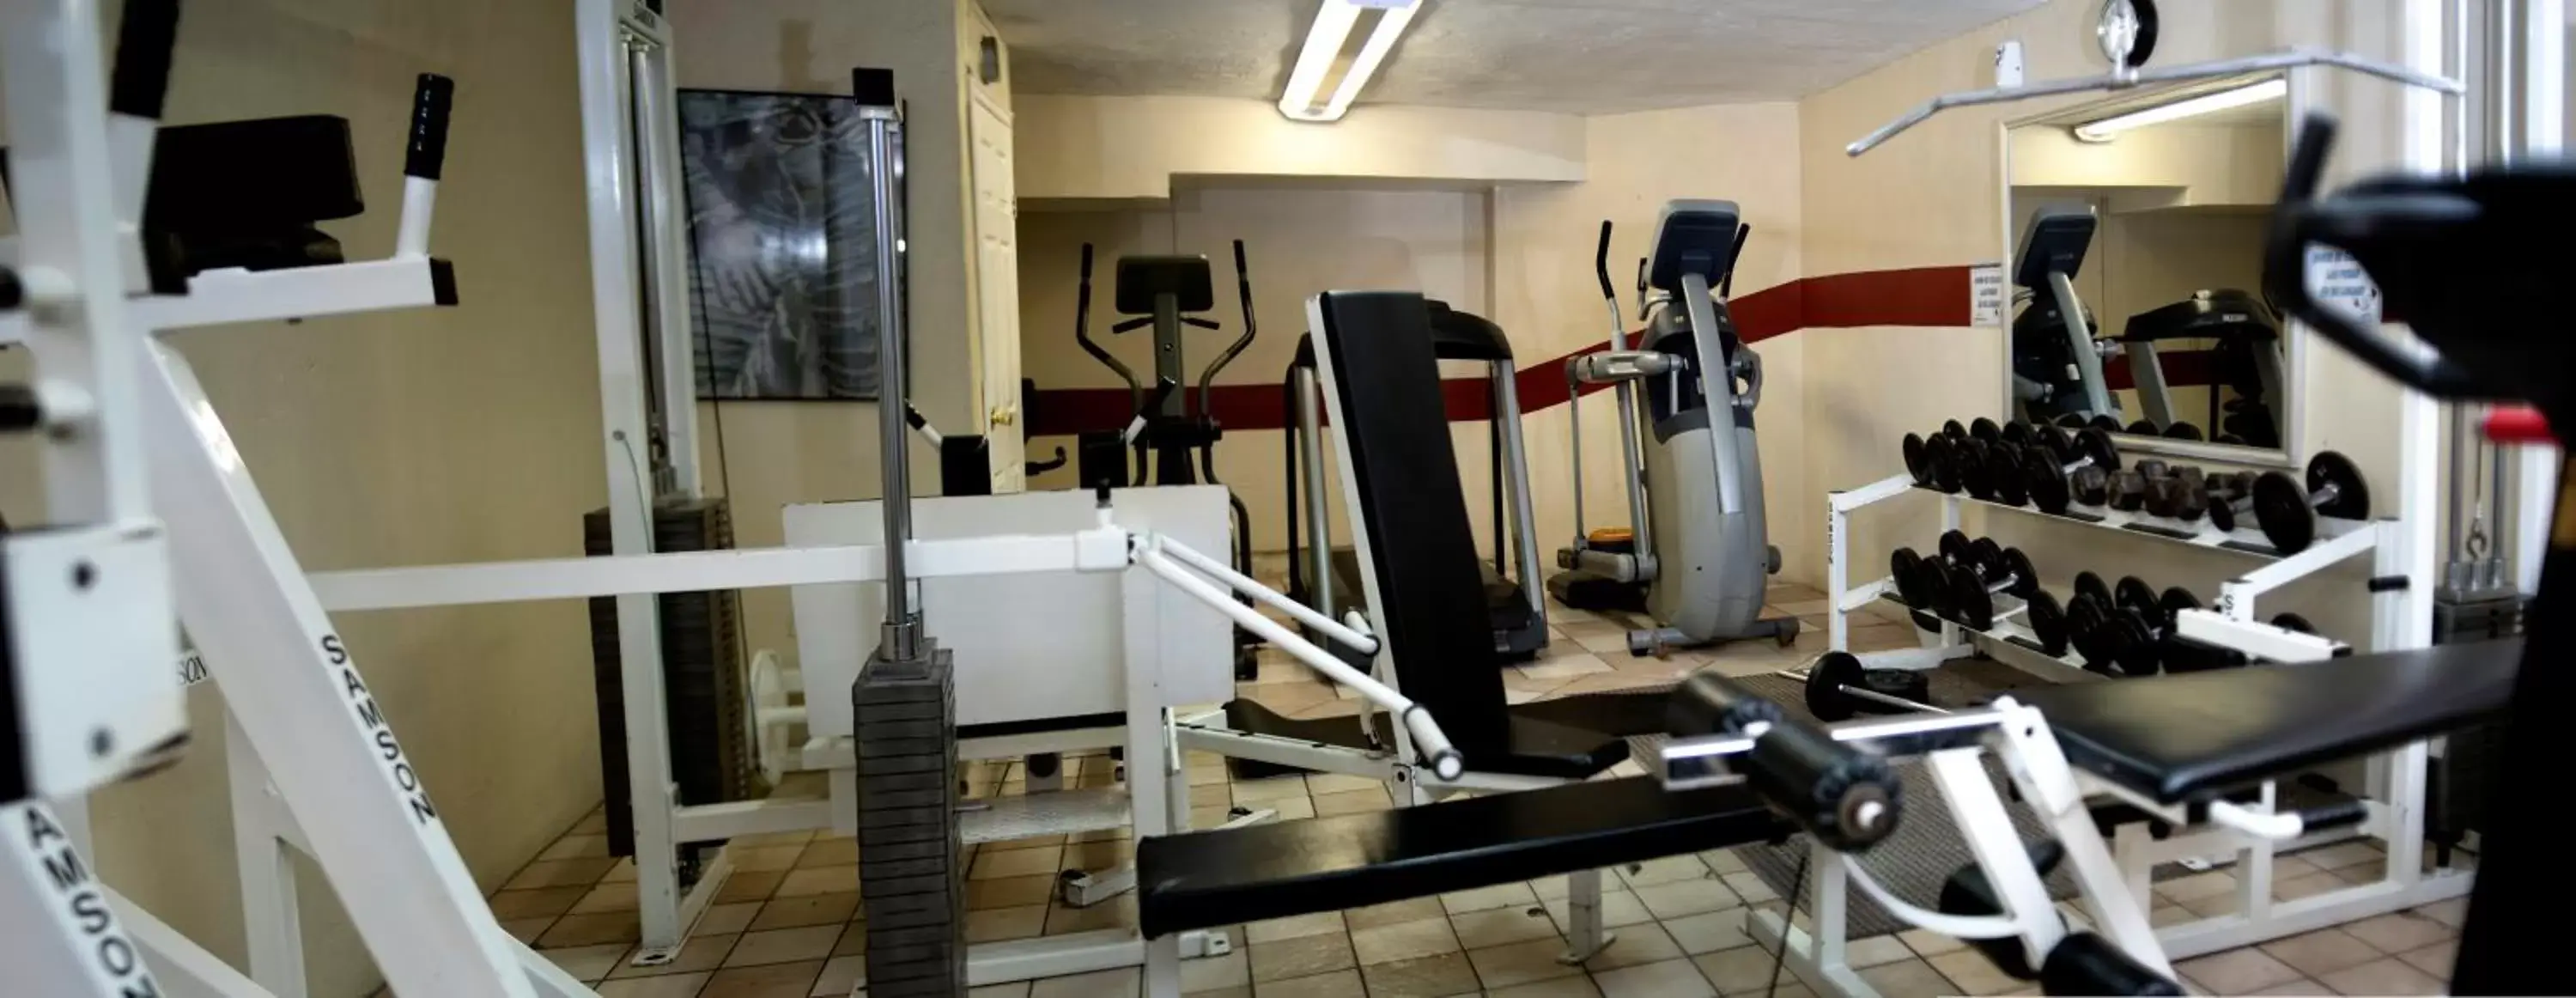 Fitness centre/facilities, Fitness Center/Facilities in Business Hotel & Suites María Bonita